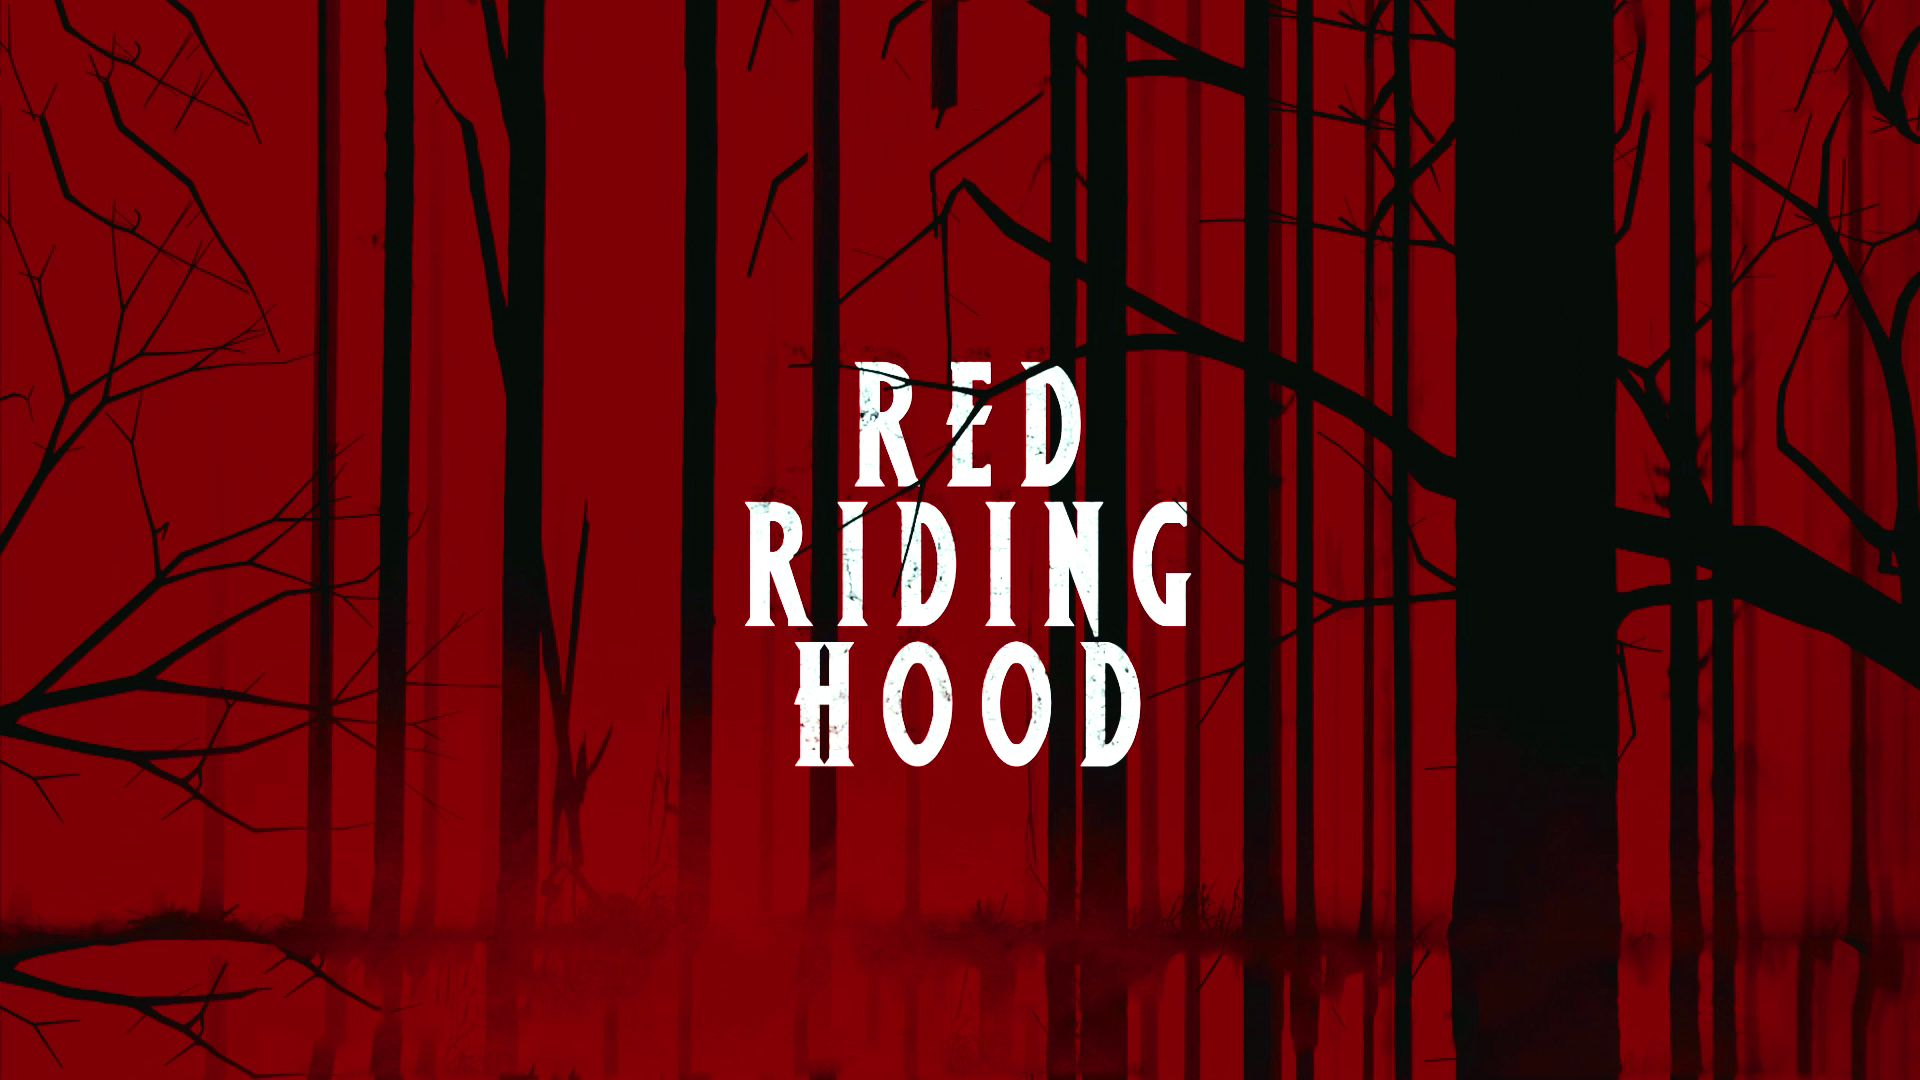 1920x1080 Red Riding Hood Wallpaper: Red Riding Hood Wallpaper | Red riding hood, Red riding hood 2011, Hood wallpapers